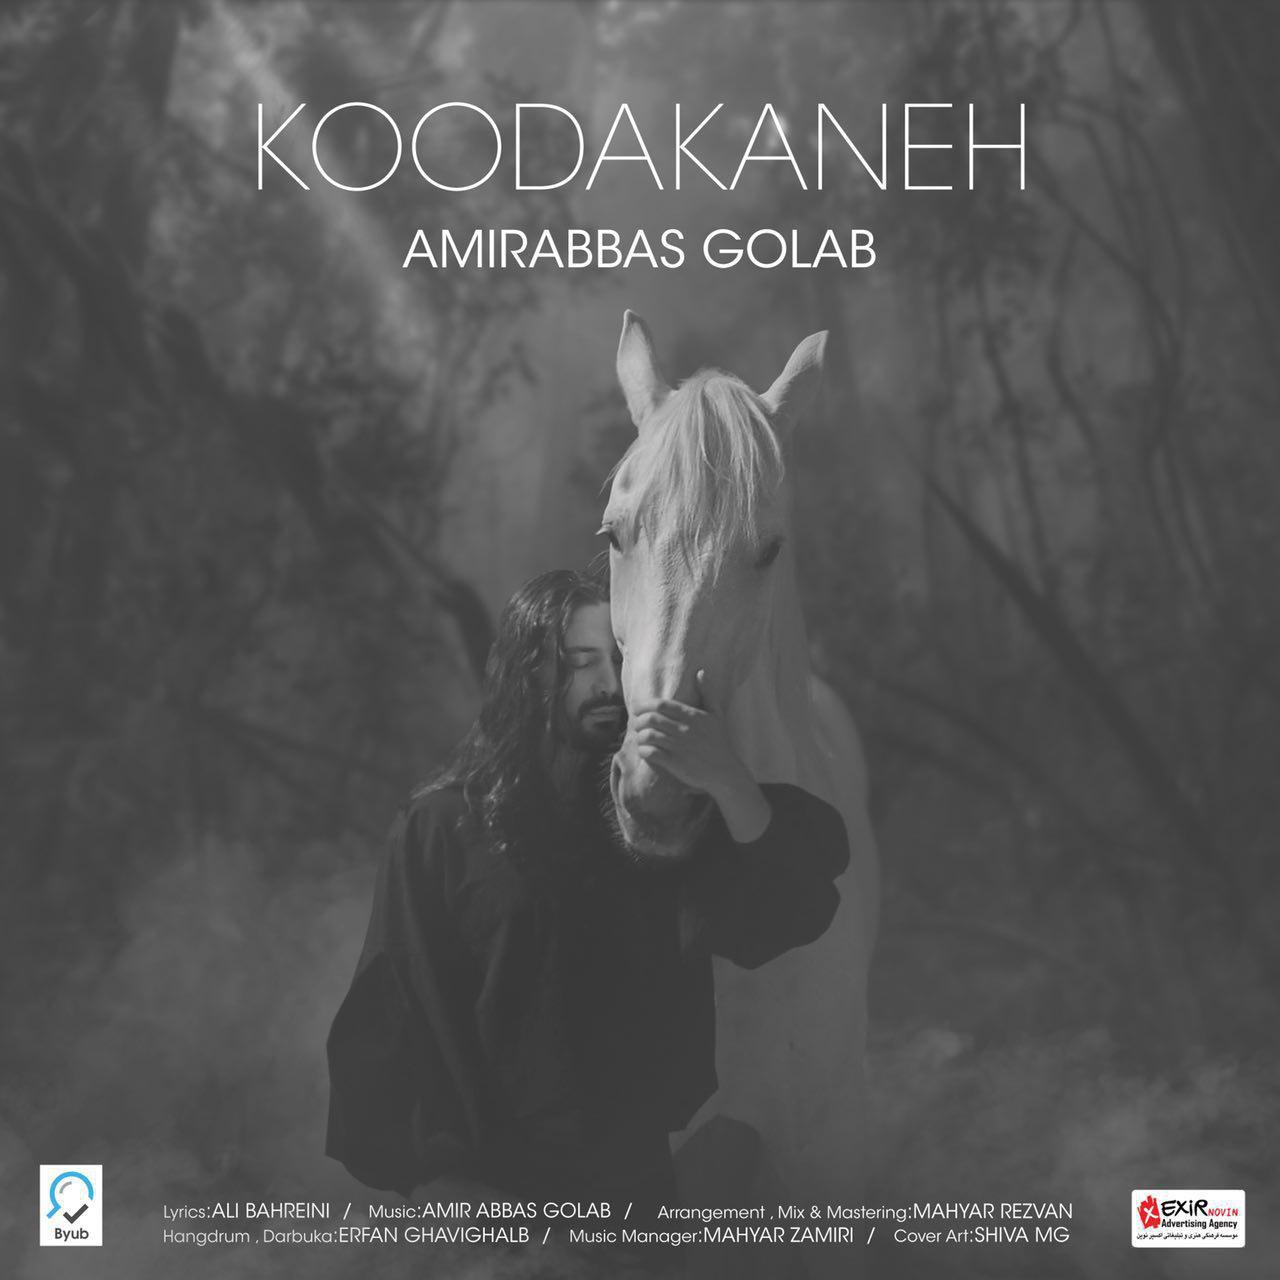 AmirAbbas-Golab-Koodakaneh Amirabbas Golab - Koodakaneh